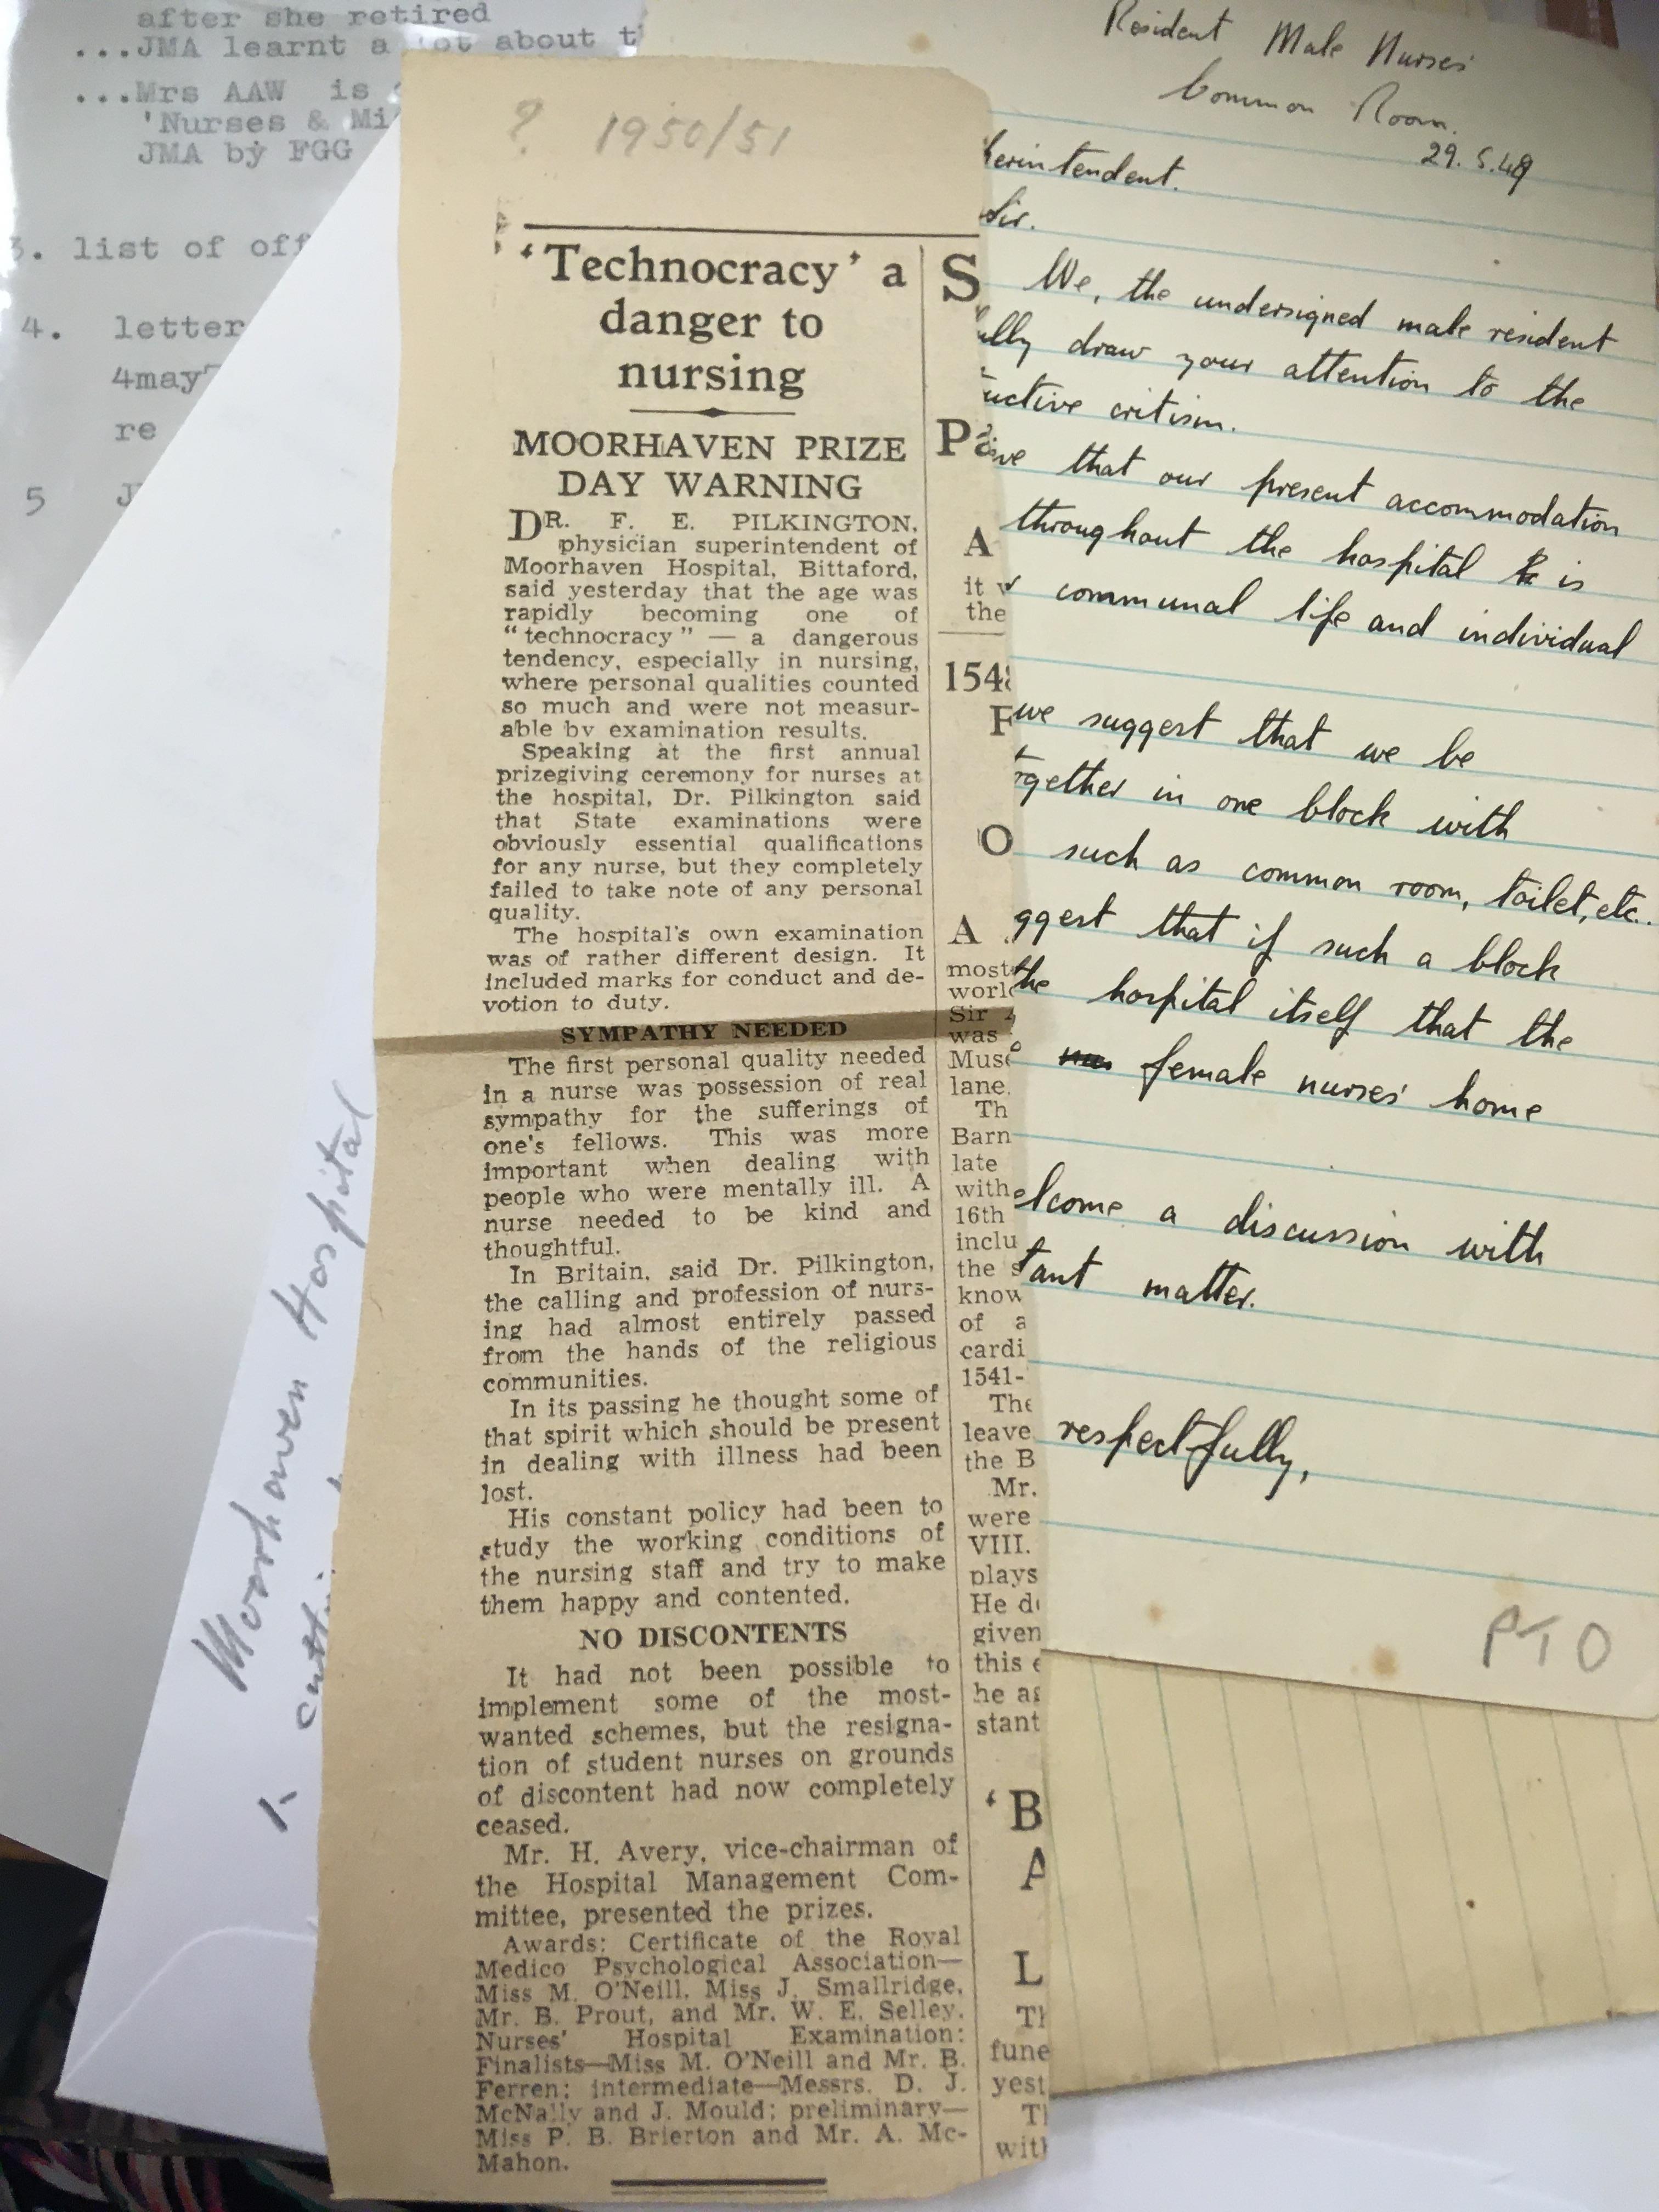 1950 article "Technocracy" threat to nursing